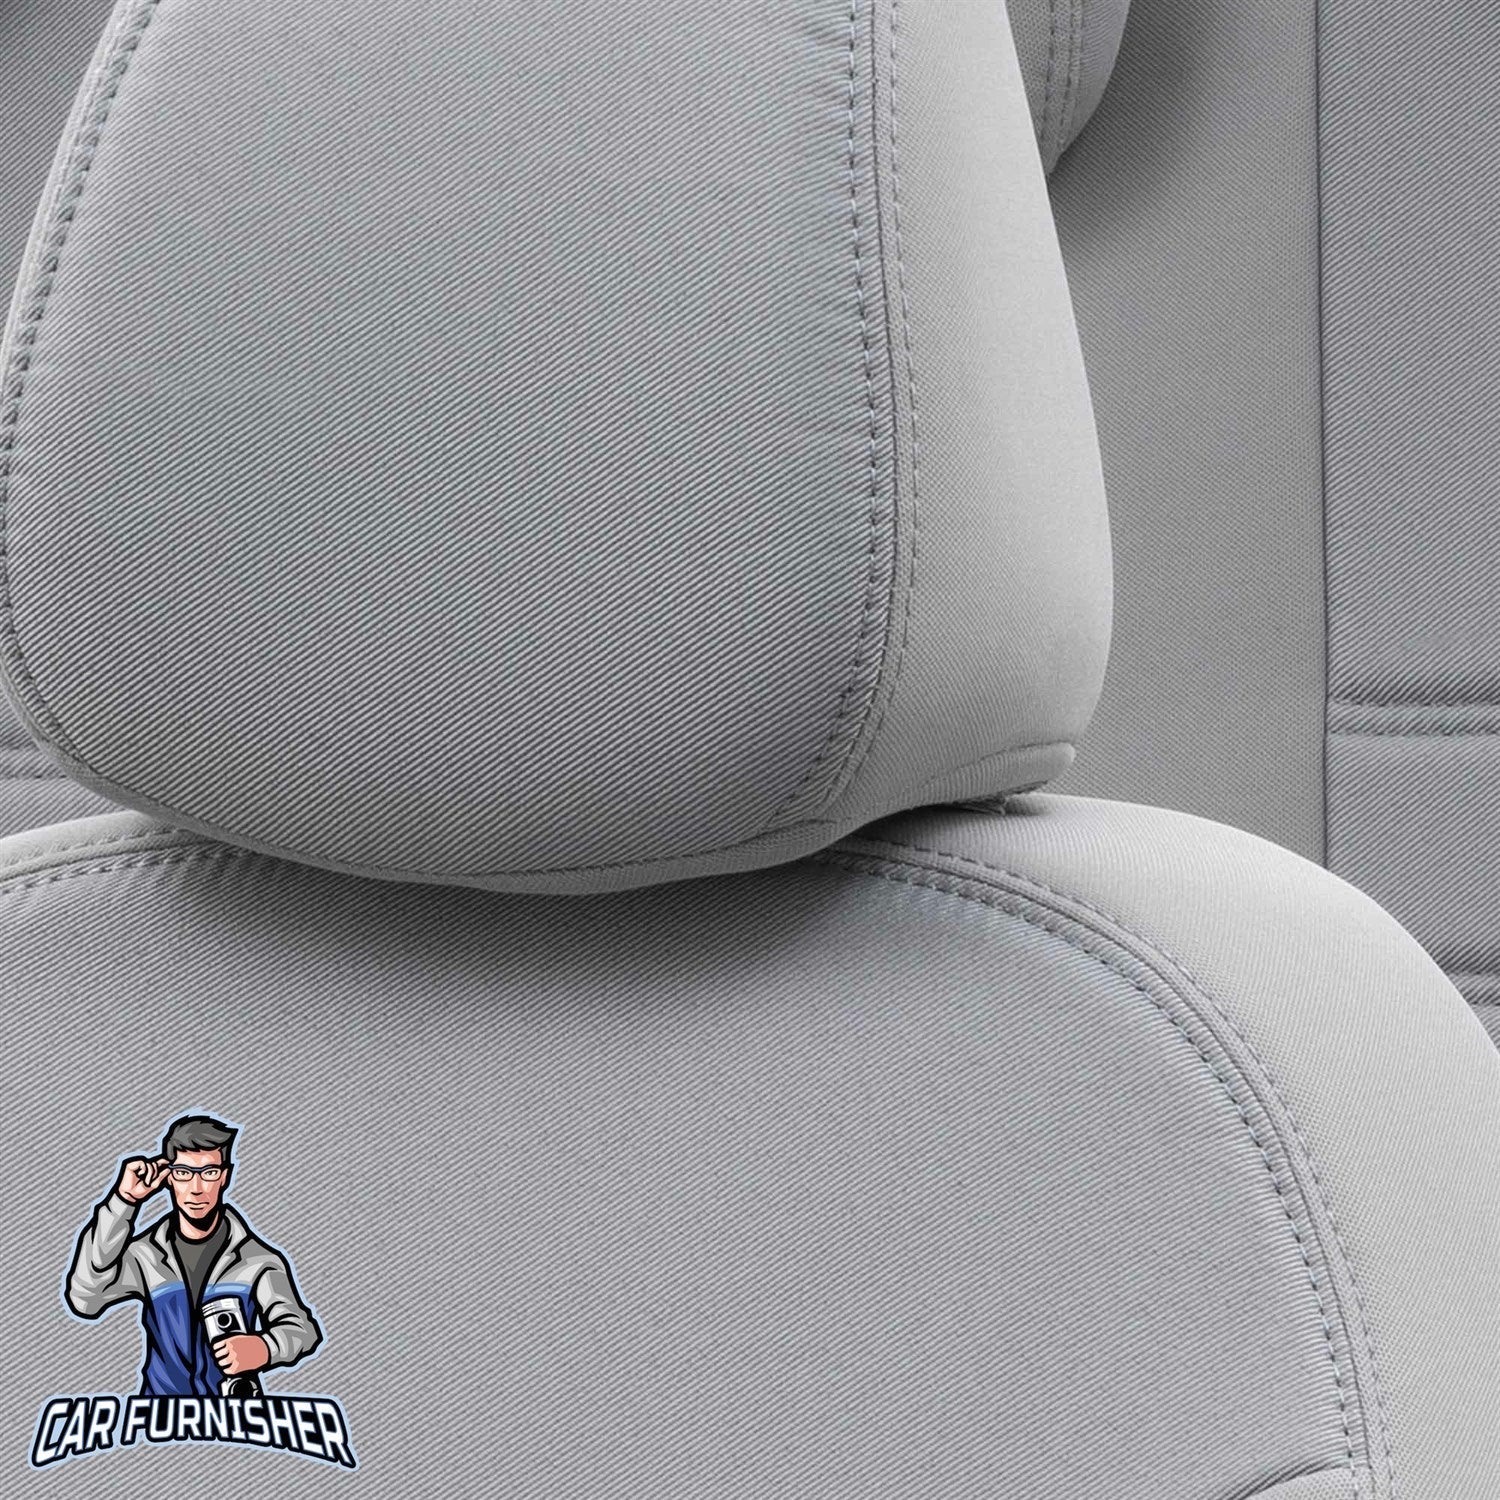 Suzuki Swift Seat Covers Original Jacquard Design Light Gray Jacquard Fabric